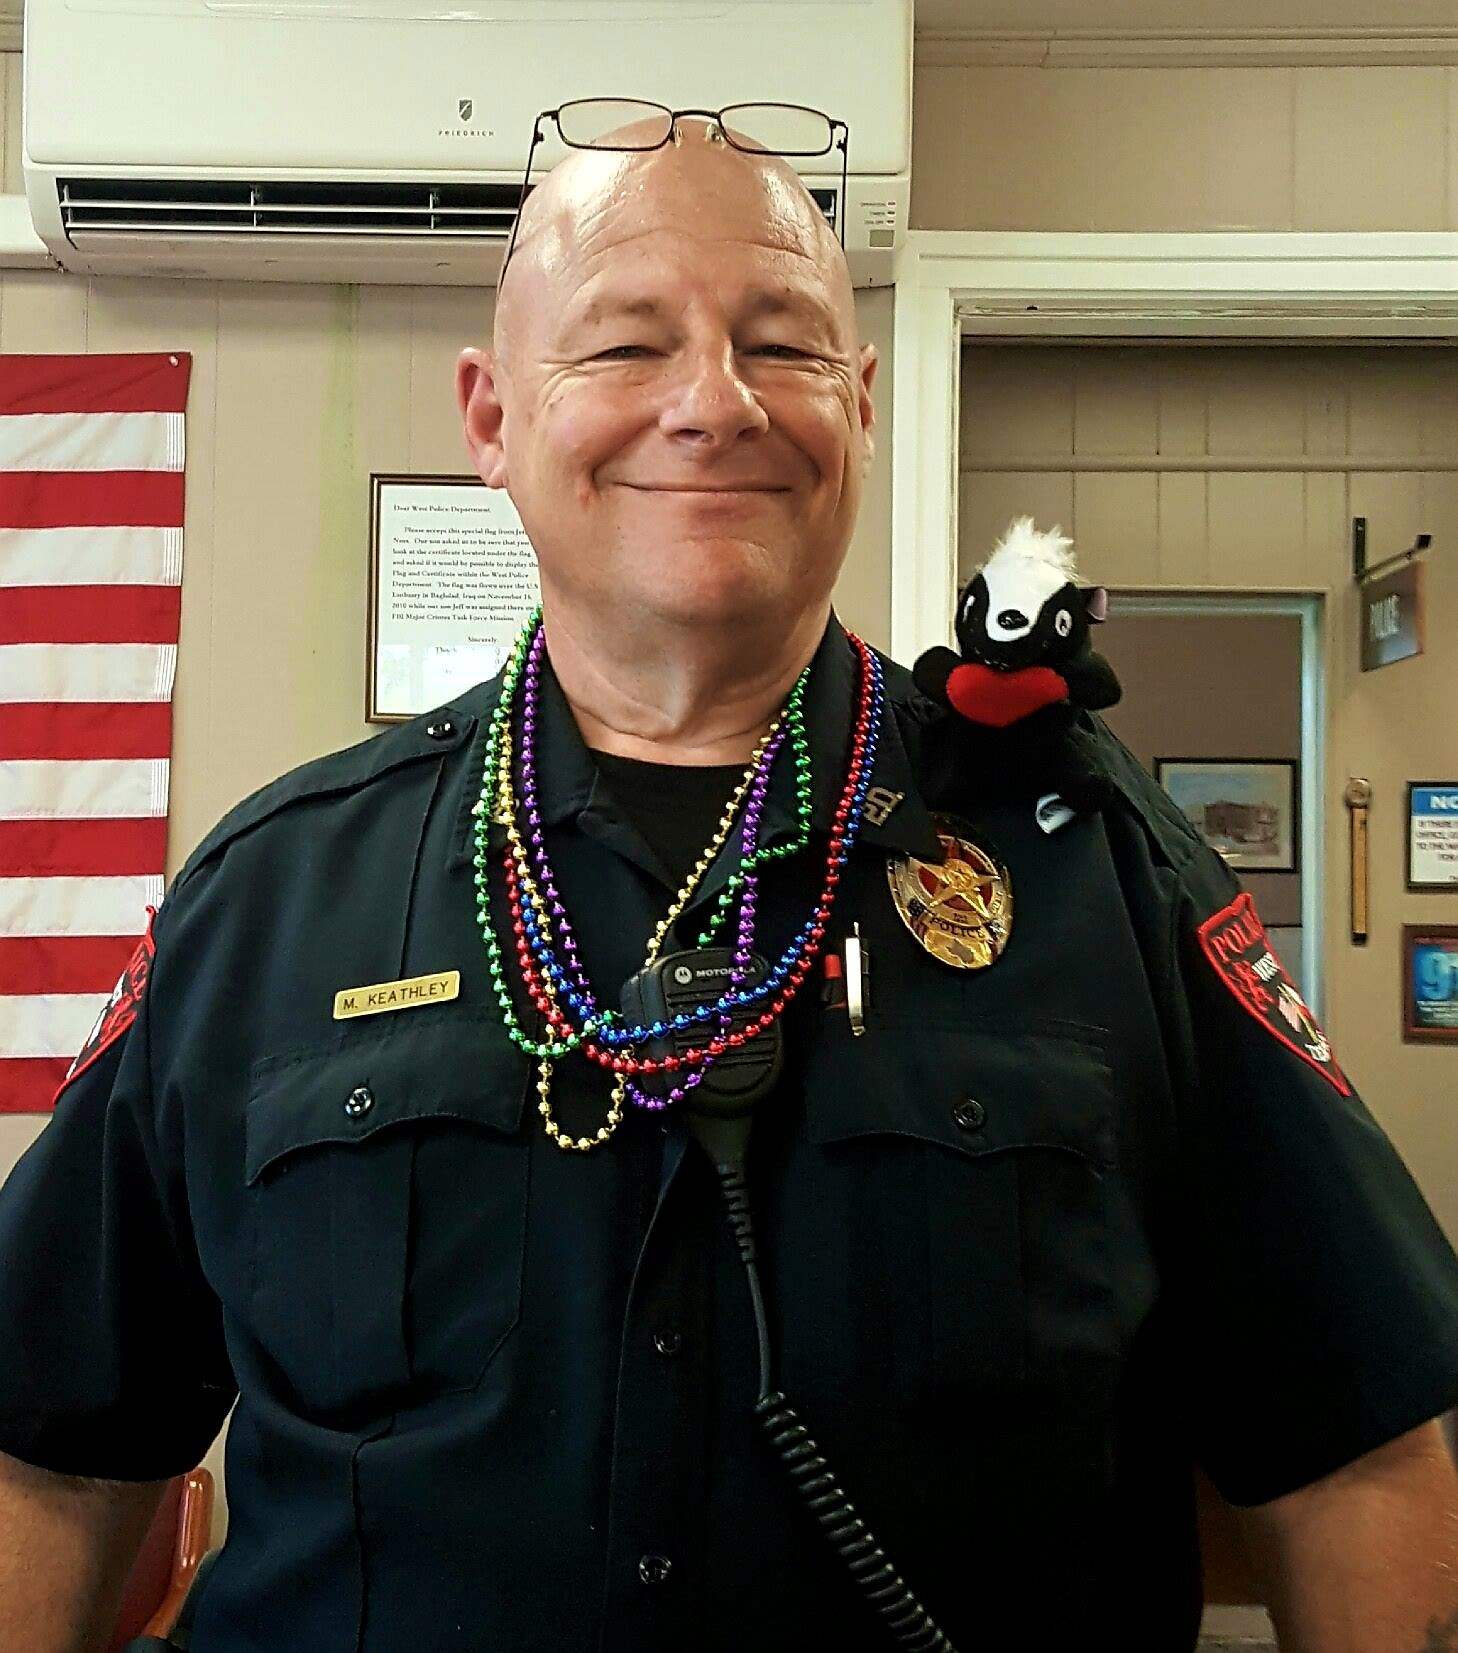 City Marshal Michael Allen Keathley | West Police Department, Texas